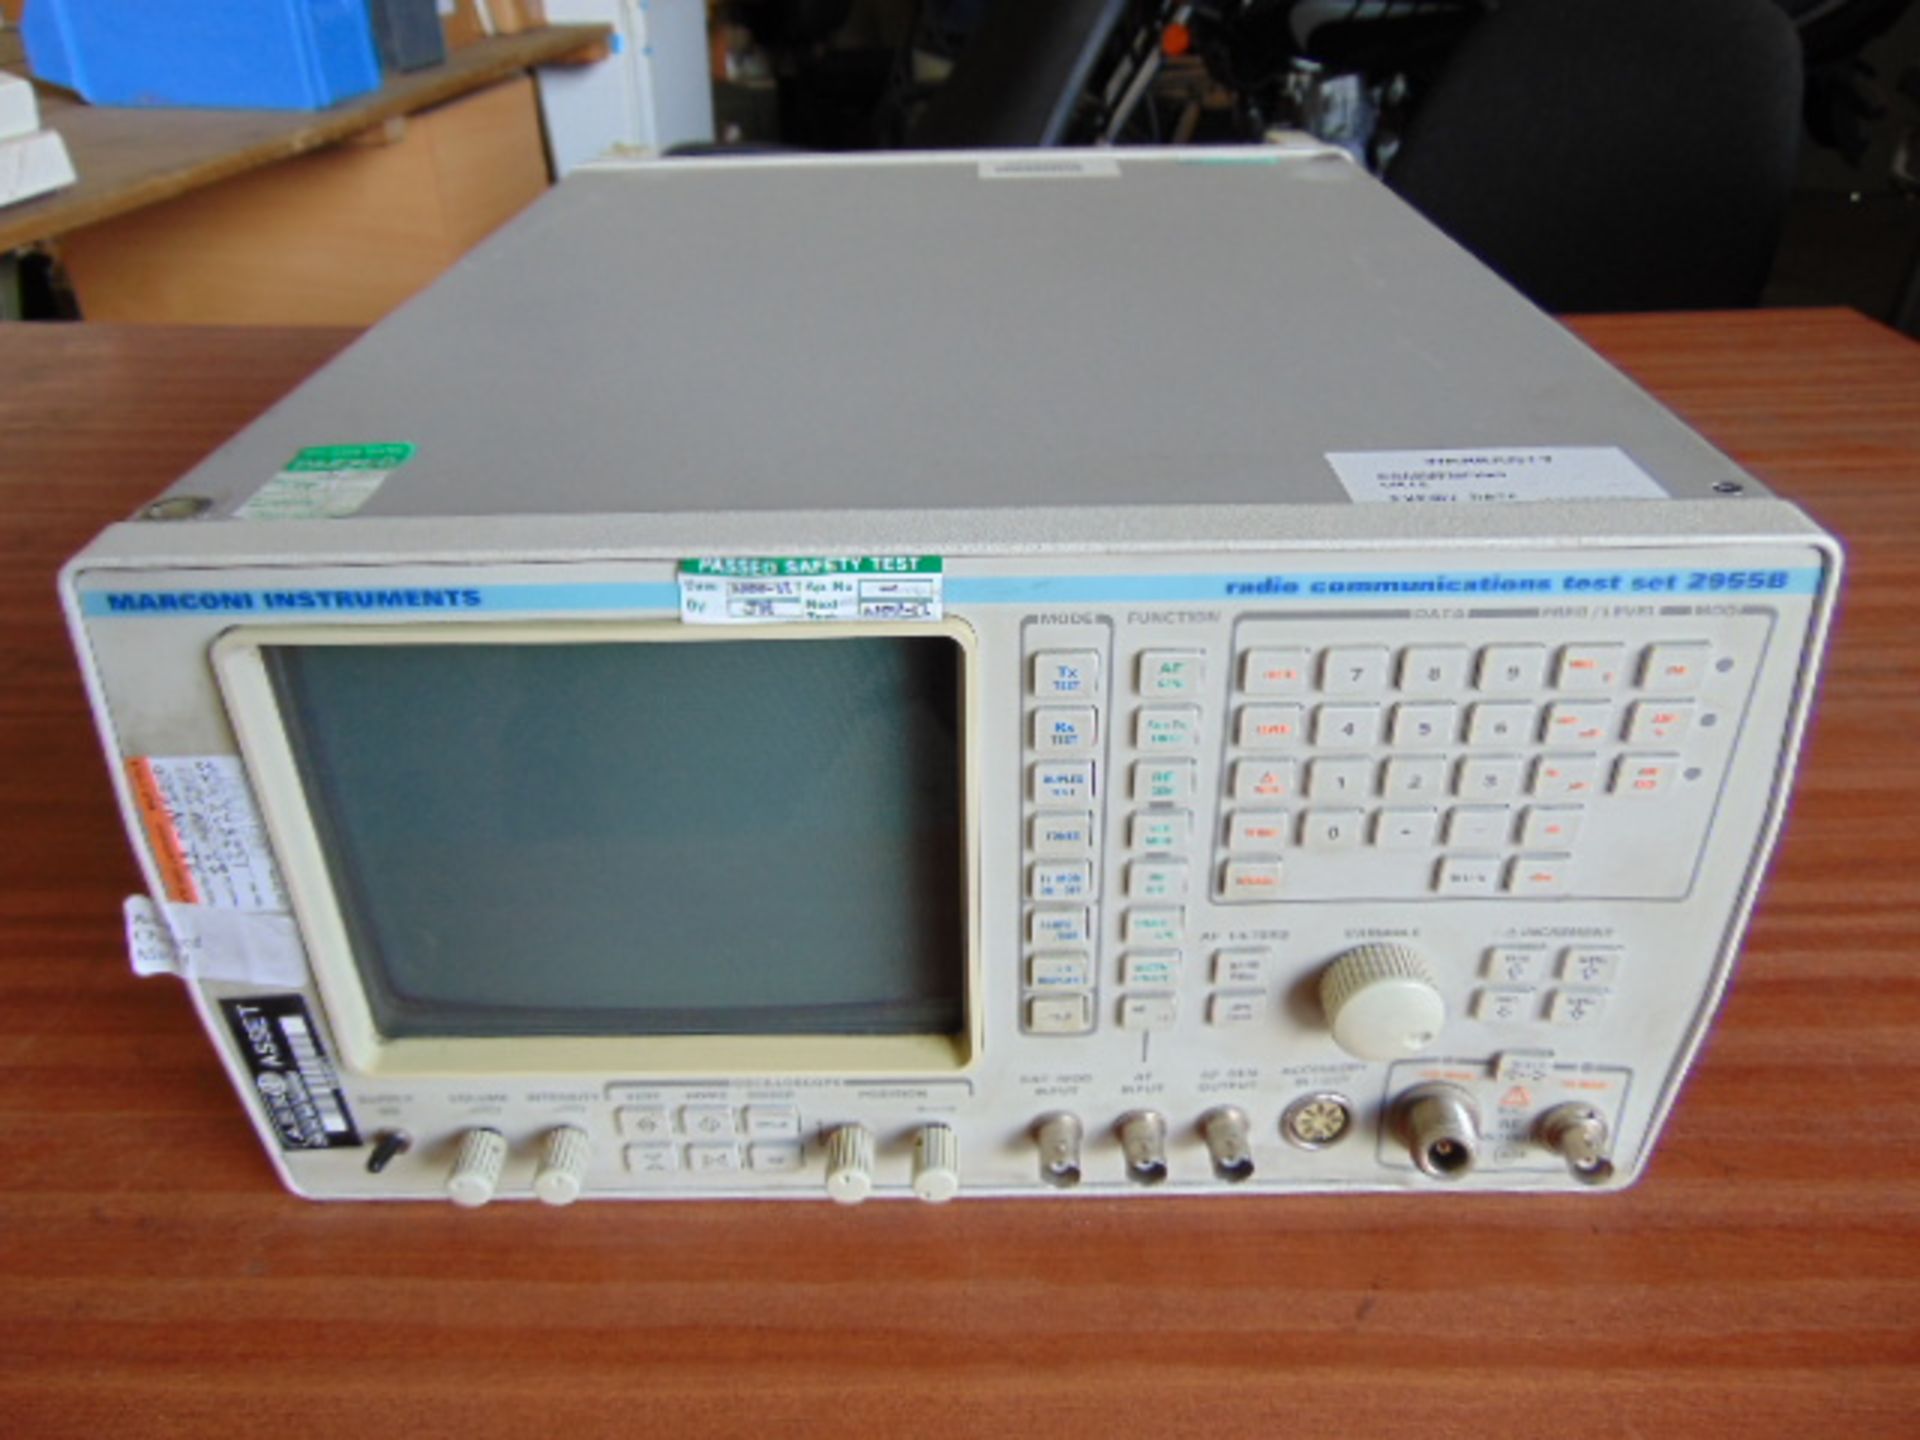 Marconi 2955B Radio Communications Test Set